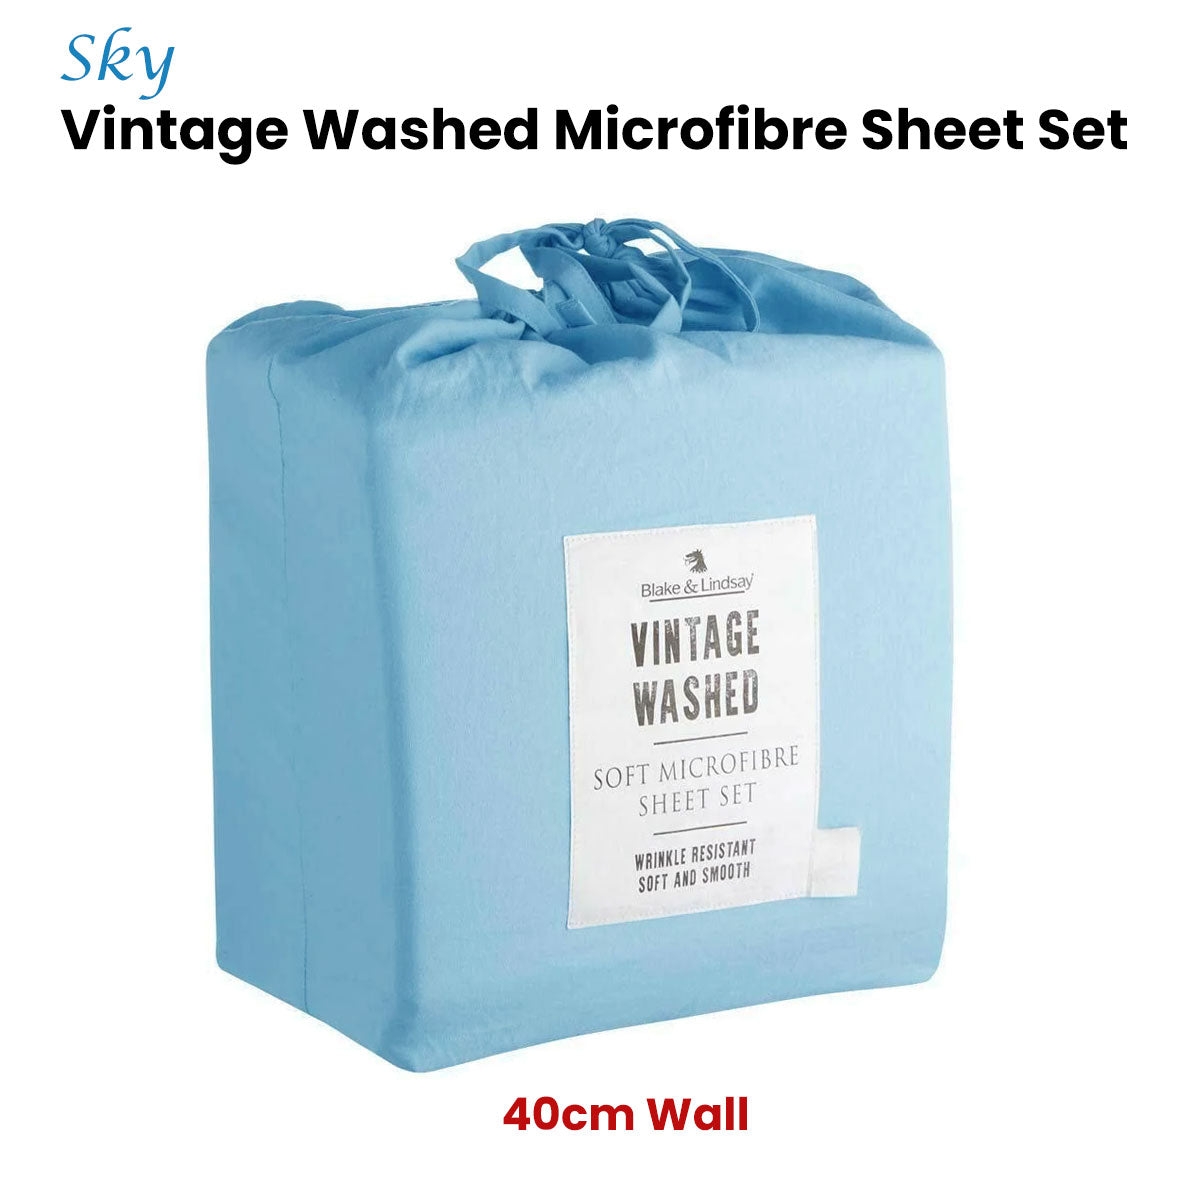 Blake & Lindsay Sky Vintage Washed Microfibre Sheet Set 40cm Wall King Single